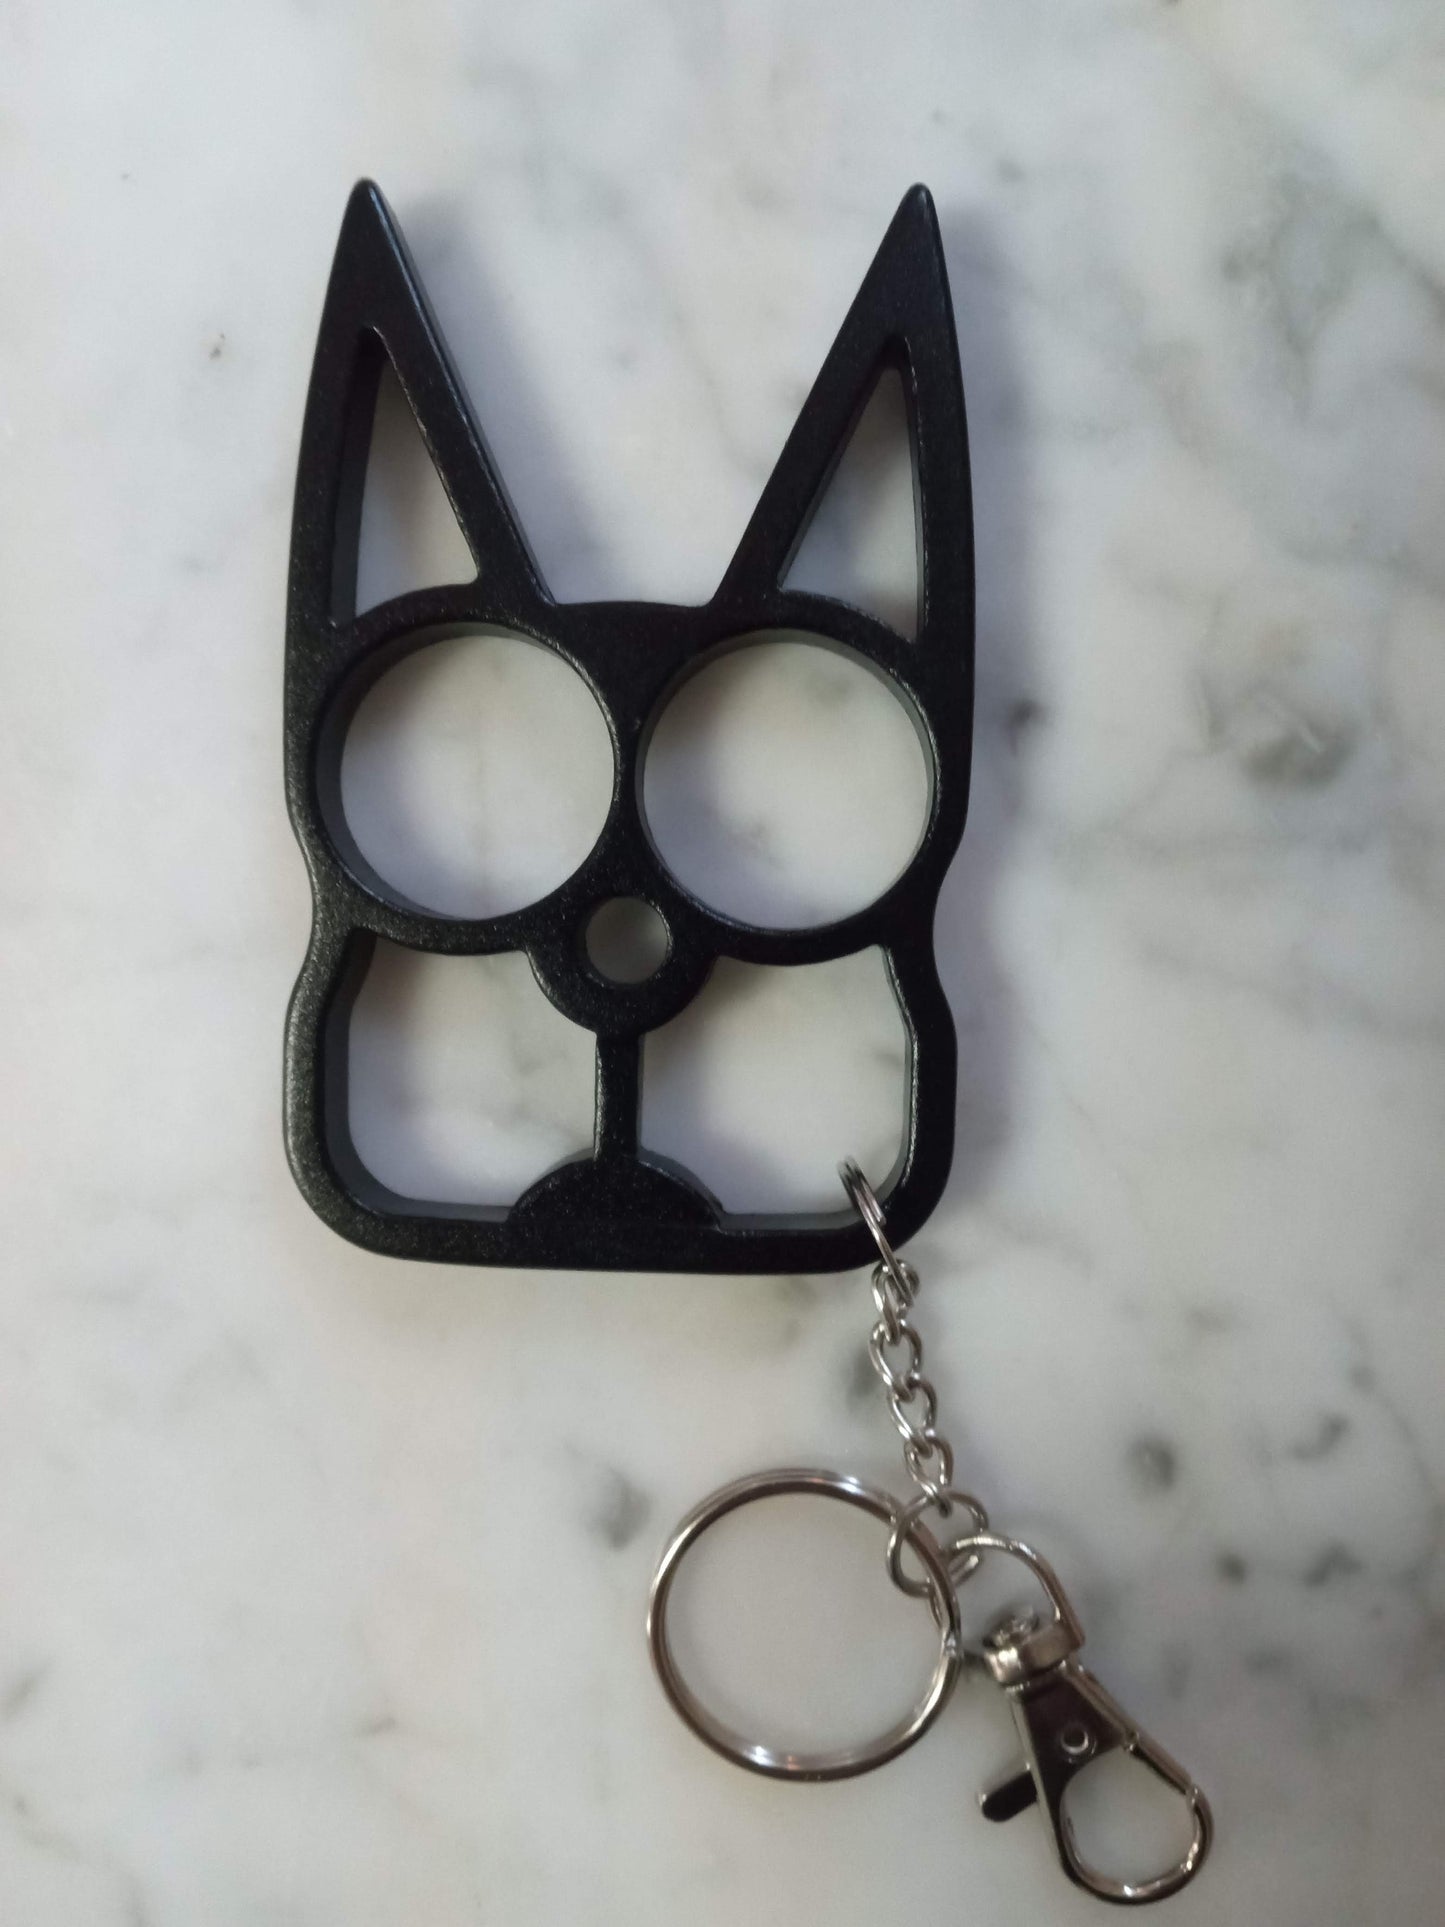 Self Defense Keychain - Black Cat Knuckle